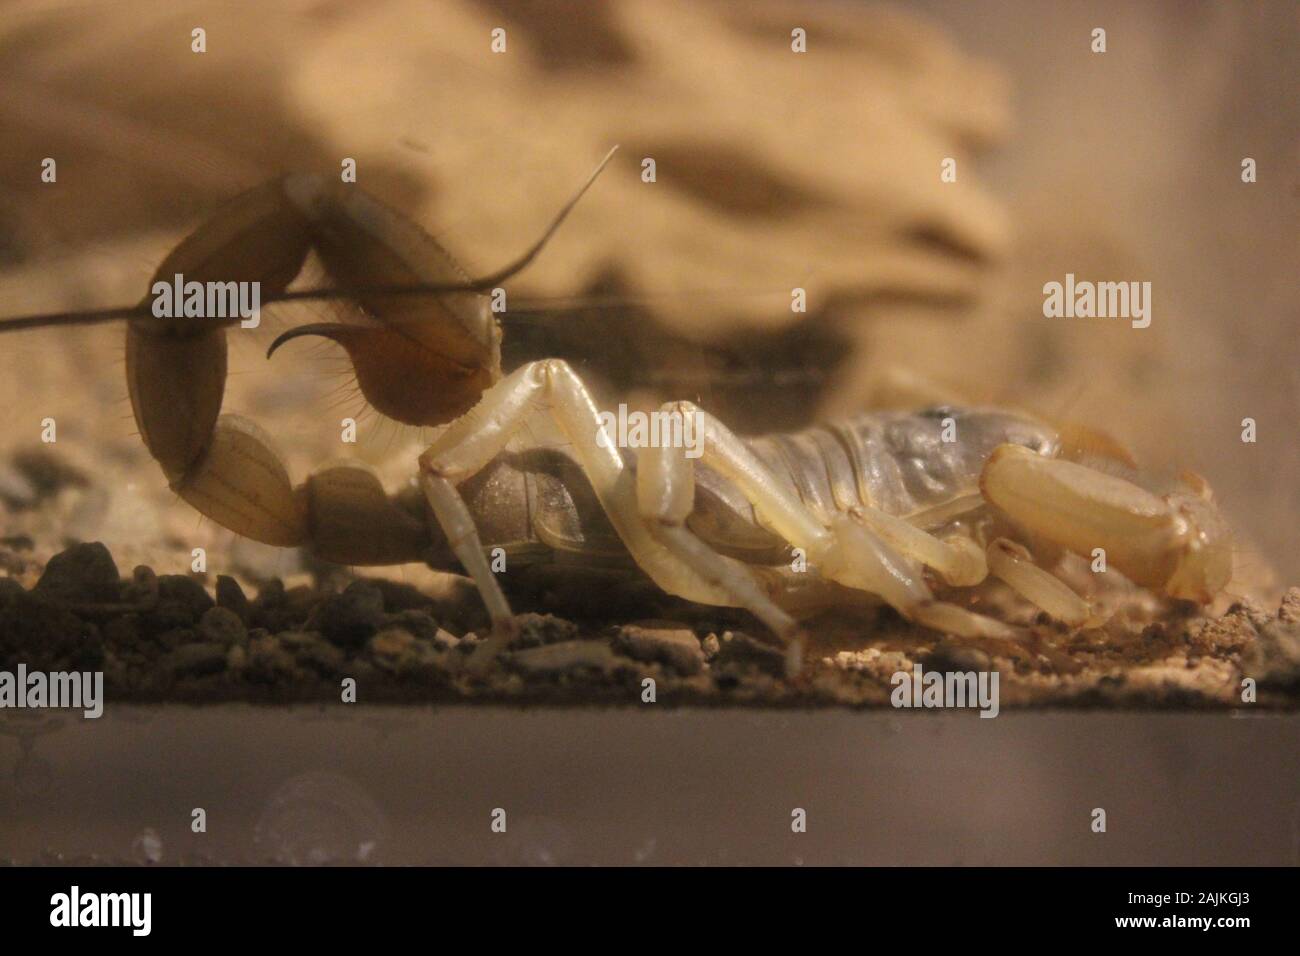 A huge scorpion bug in profile. Stock Photo